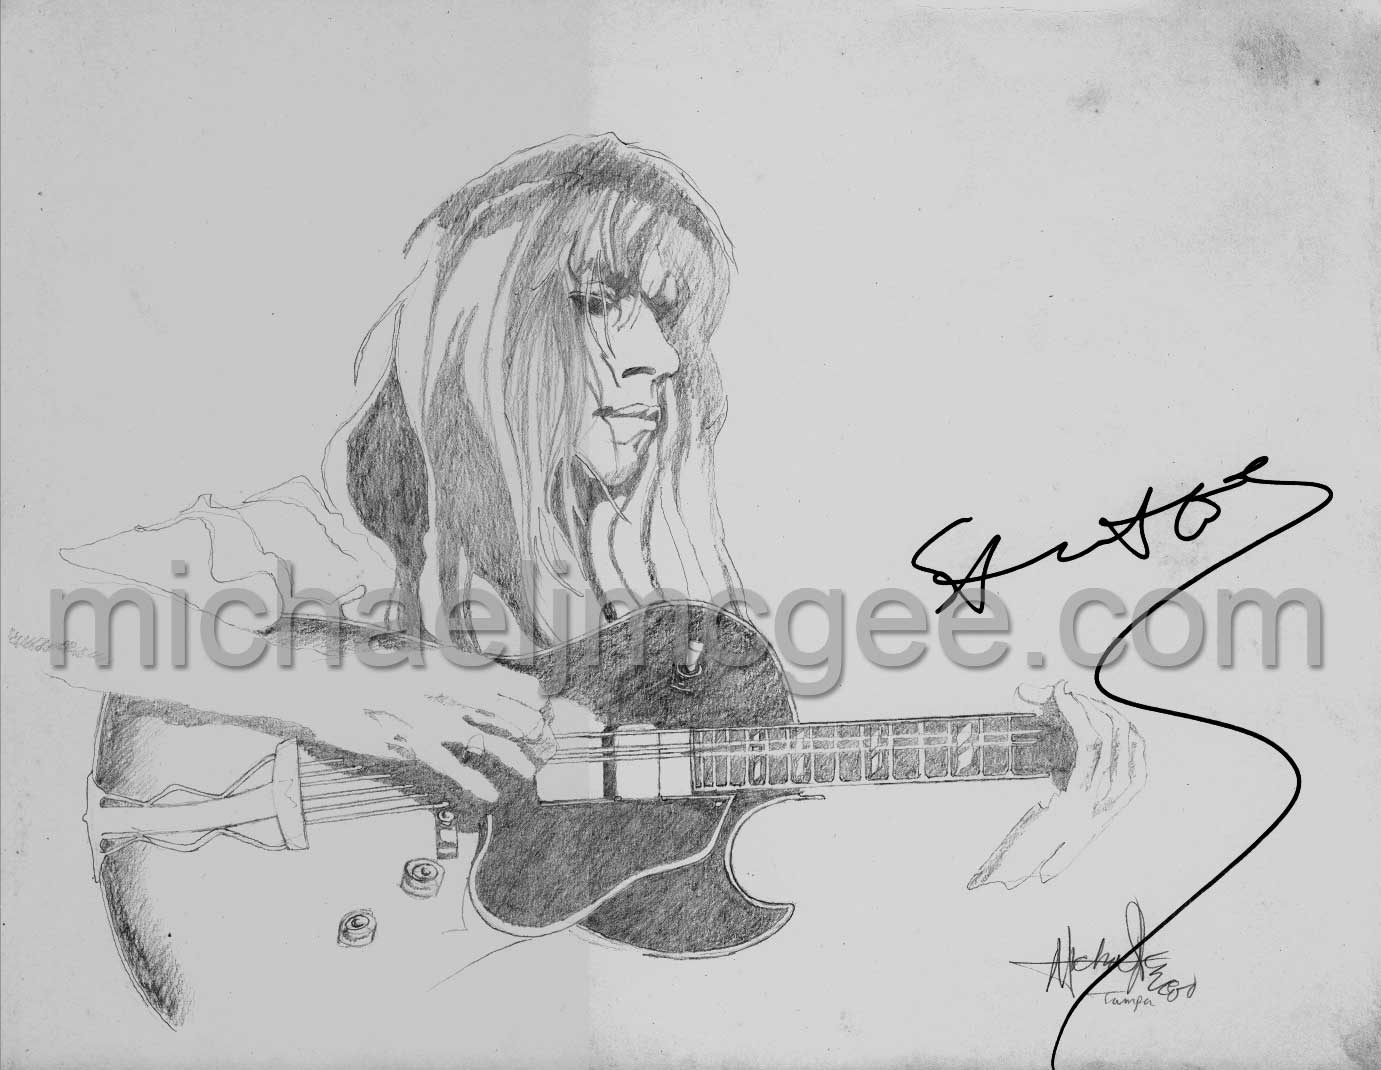 Steve Howe / MJM Artworks / michaeljmcgee.com